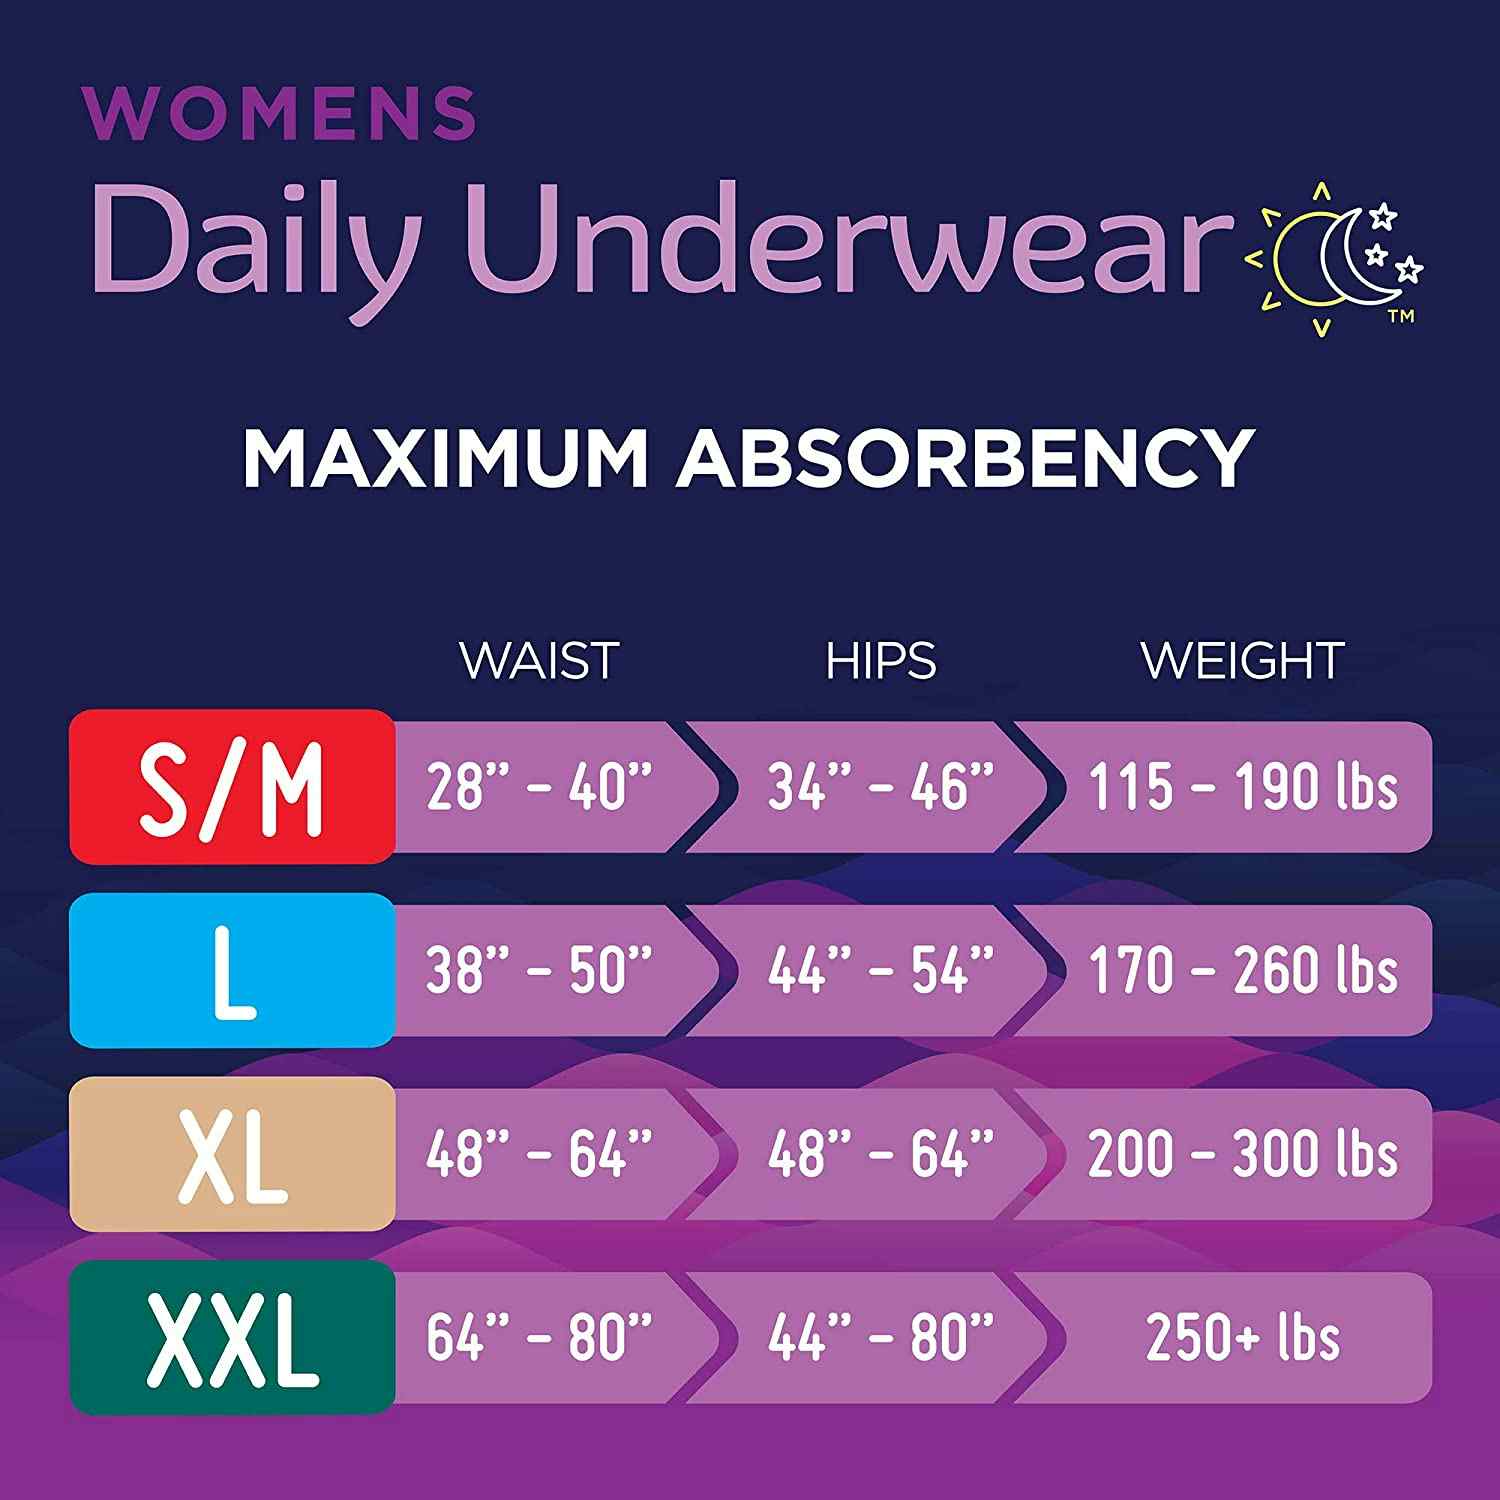 Prevail Women's PurseReady Pull-Up Underwear, Maximum